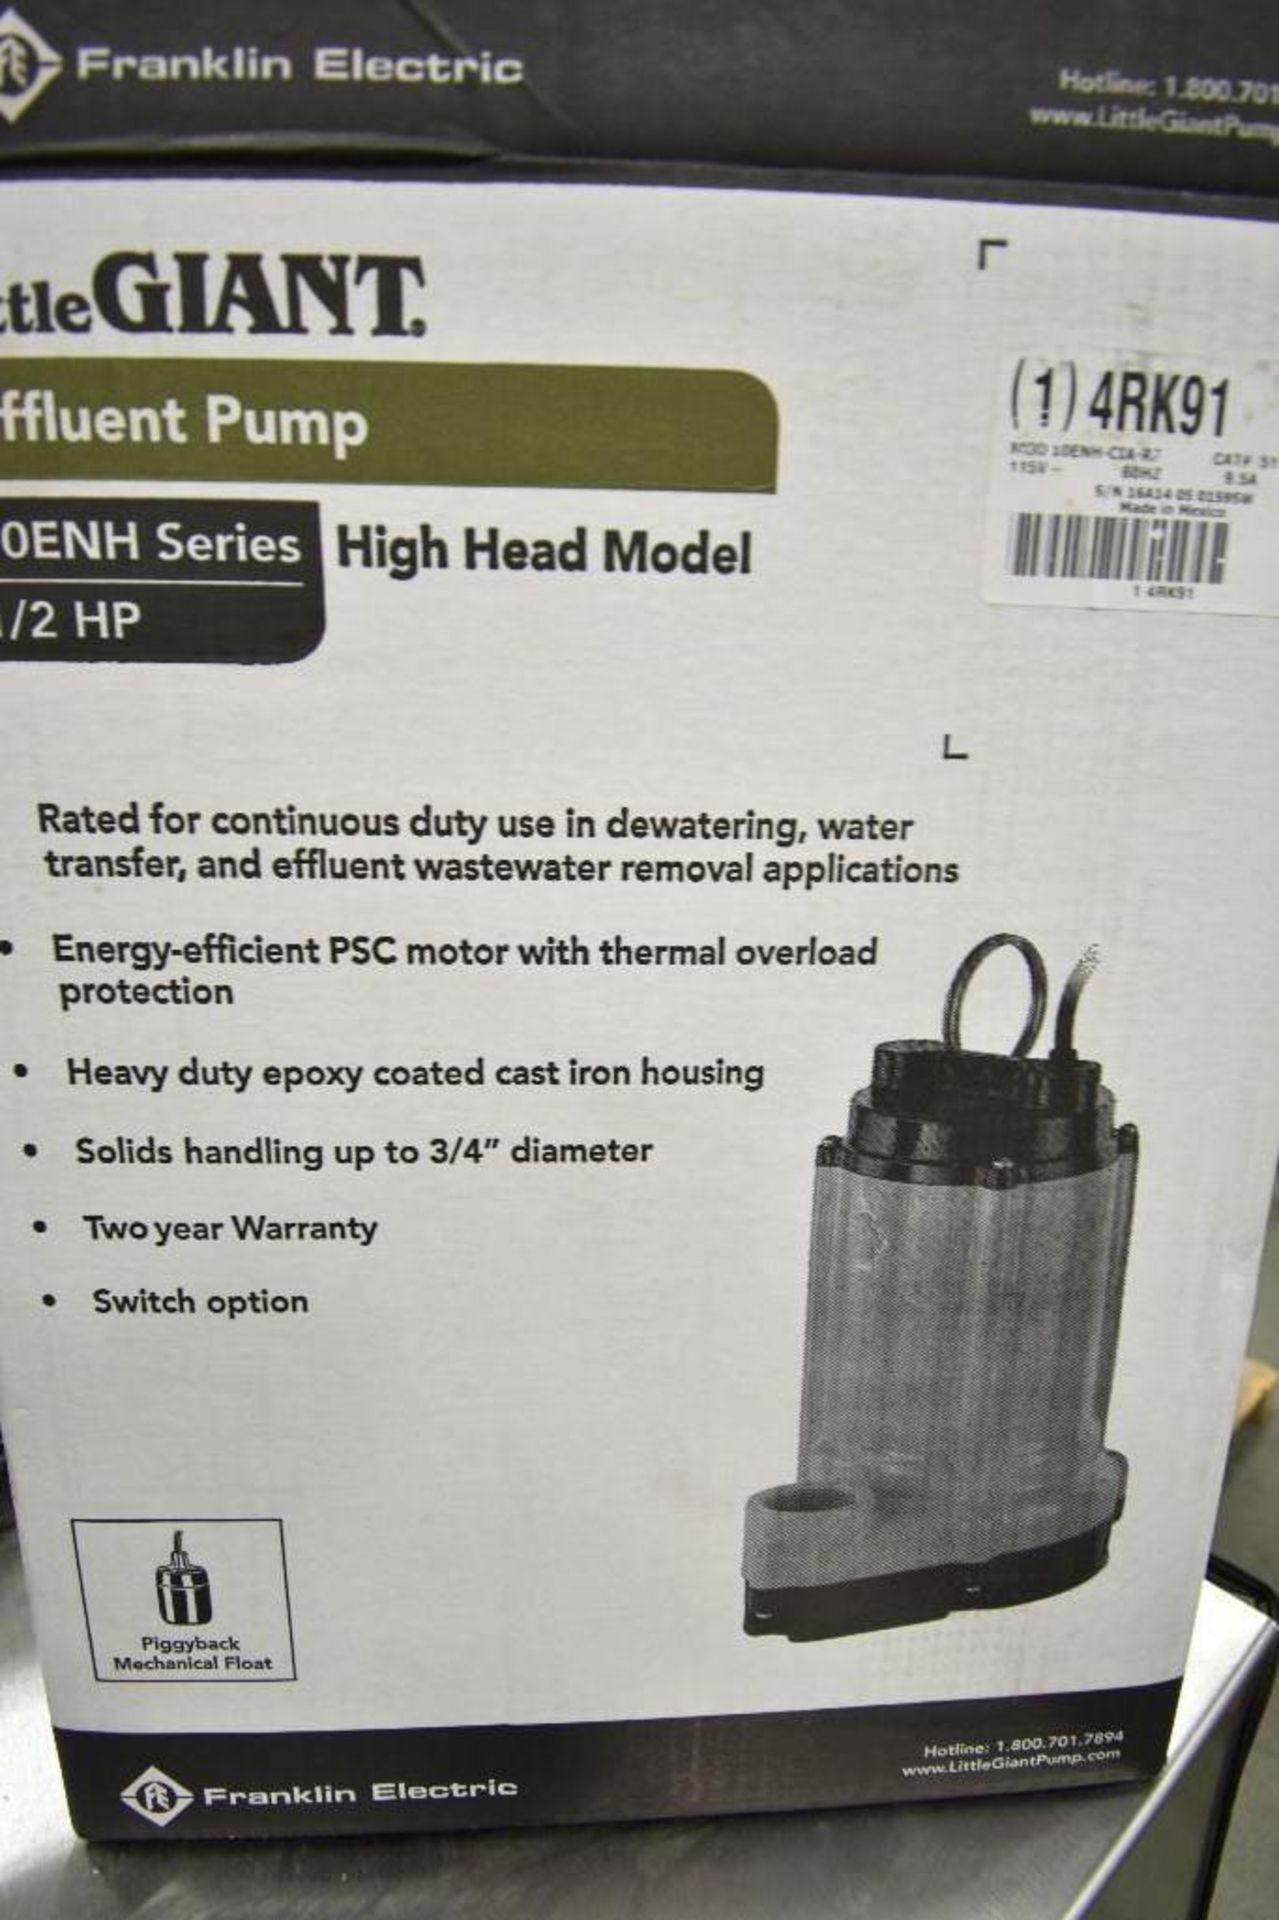 Little Giant Effluent Pump. High Head Model. Series 10ENH, 1/2hp - Image 6 of 8